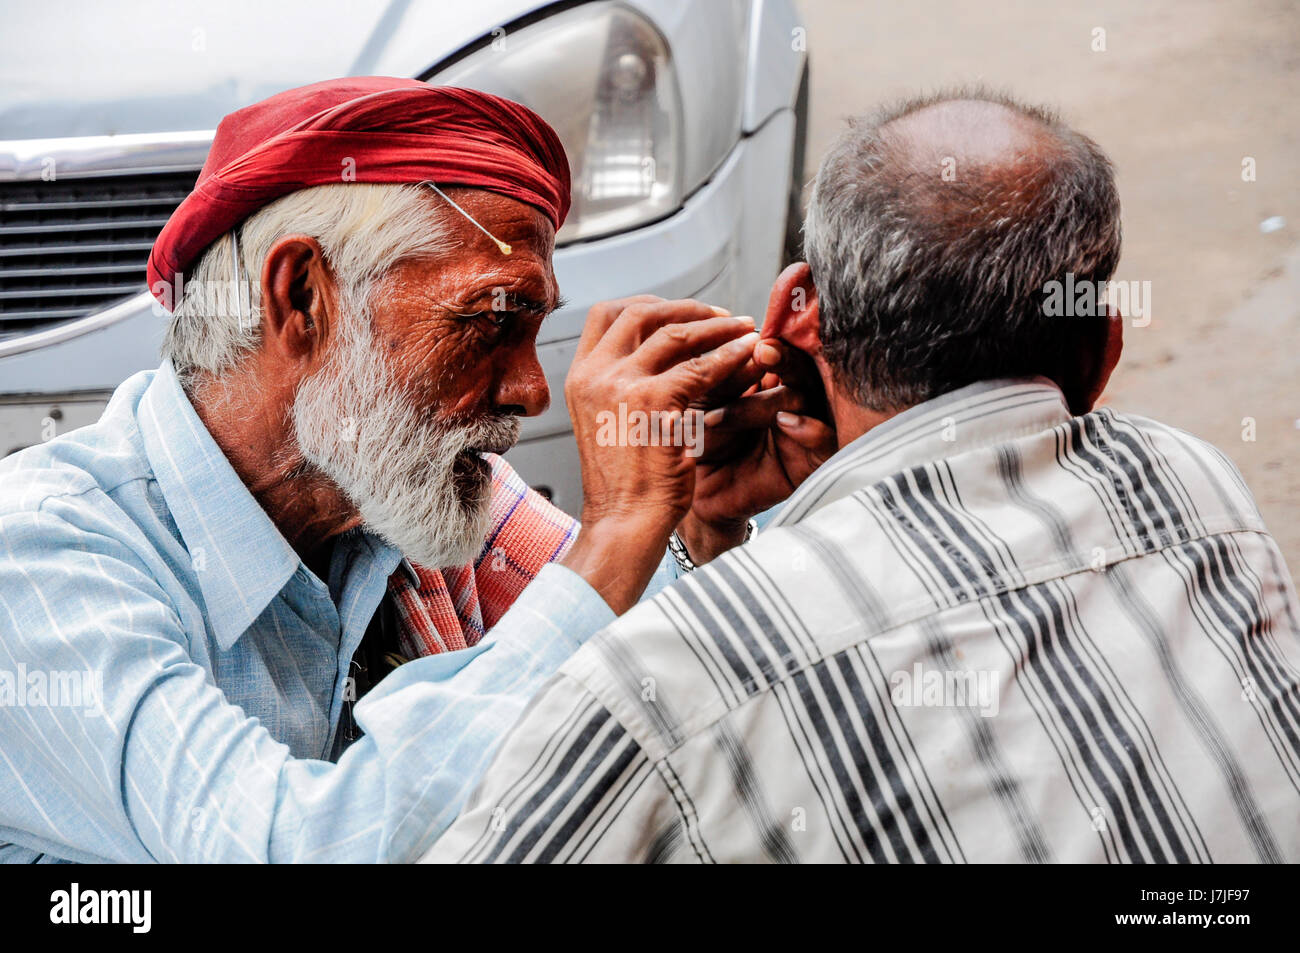 Delhi, India, september 3, 2010: Indian man cleaning man's ear on Delhi street. Stock Photo